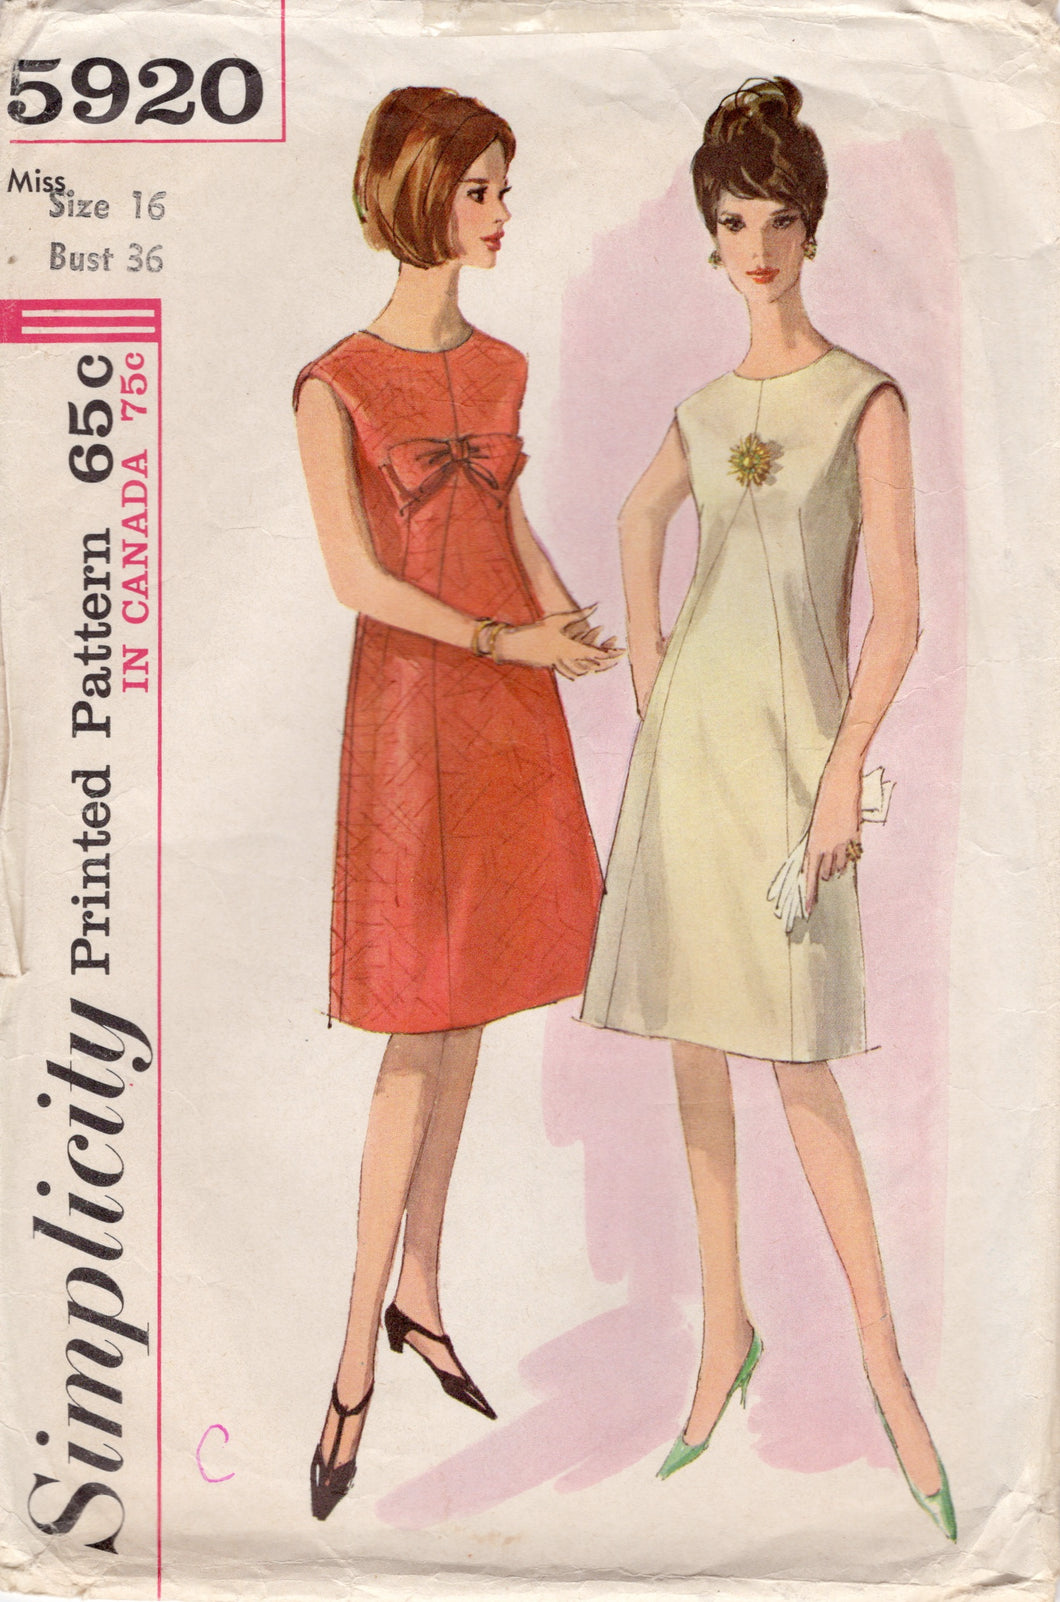 1960's Simplicity Misses' One-Piece Dress Pattern - Bust 36